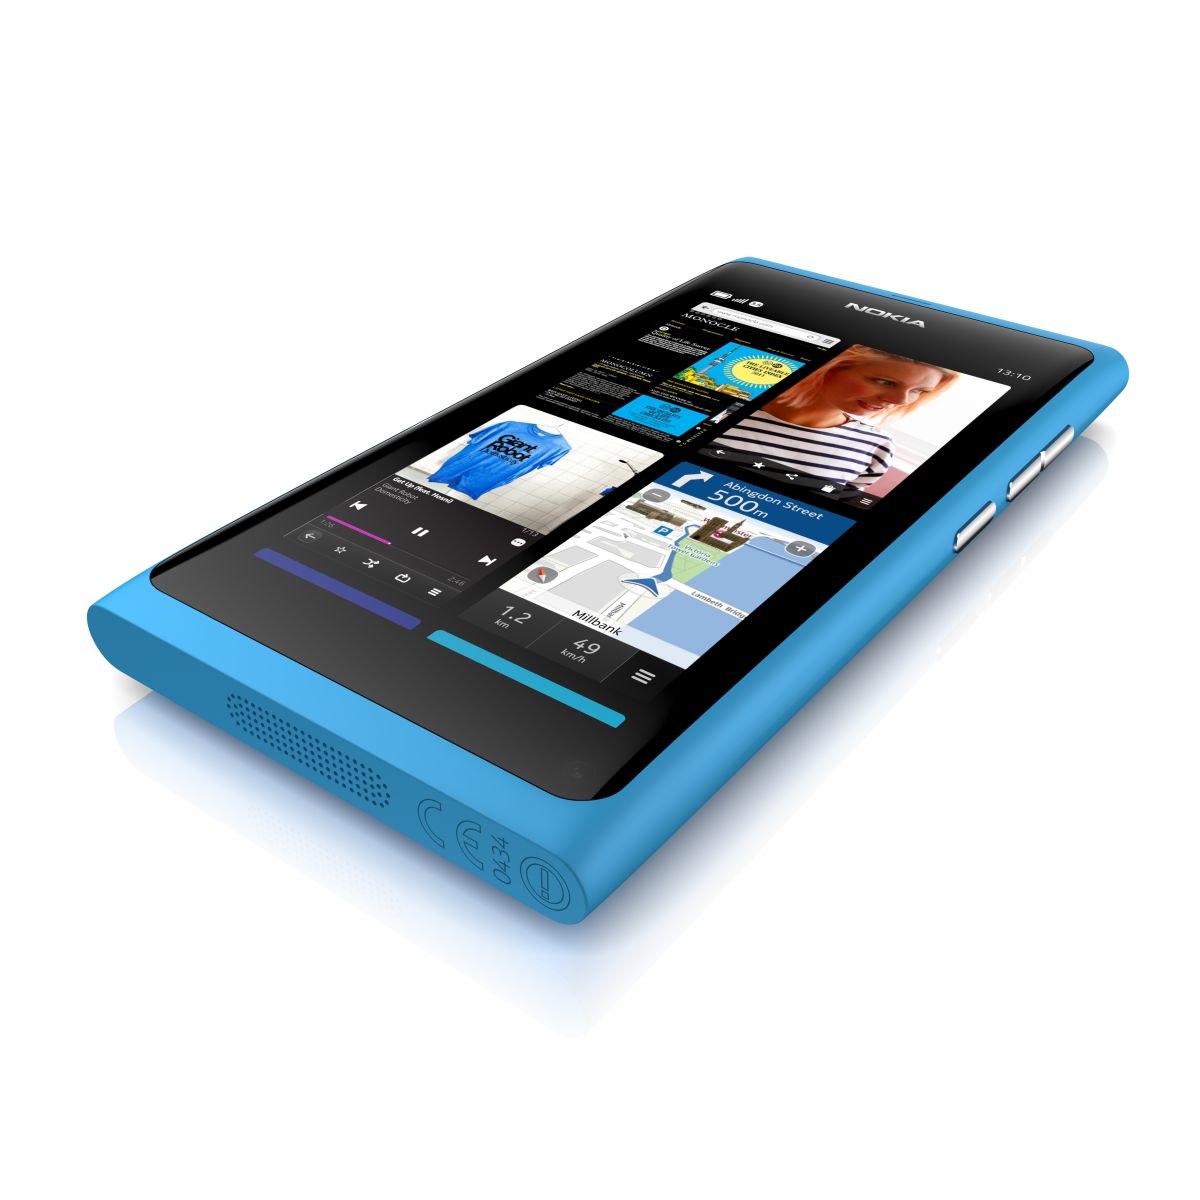 Nokia N9 - Task Switcher 2x2 View